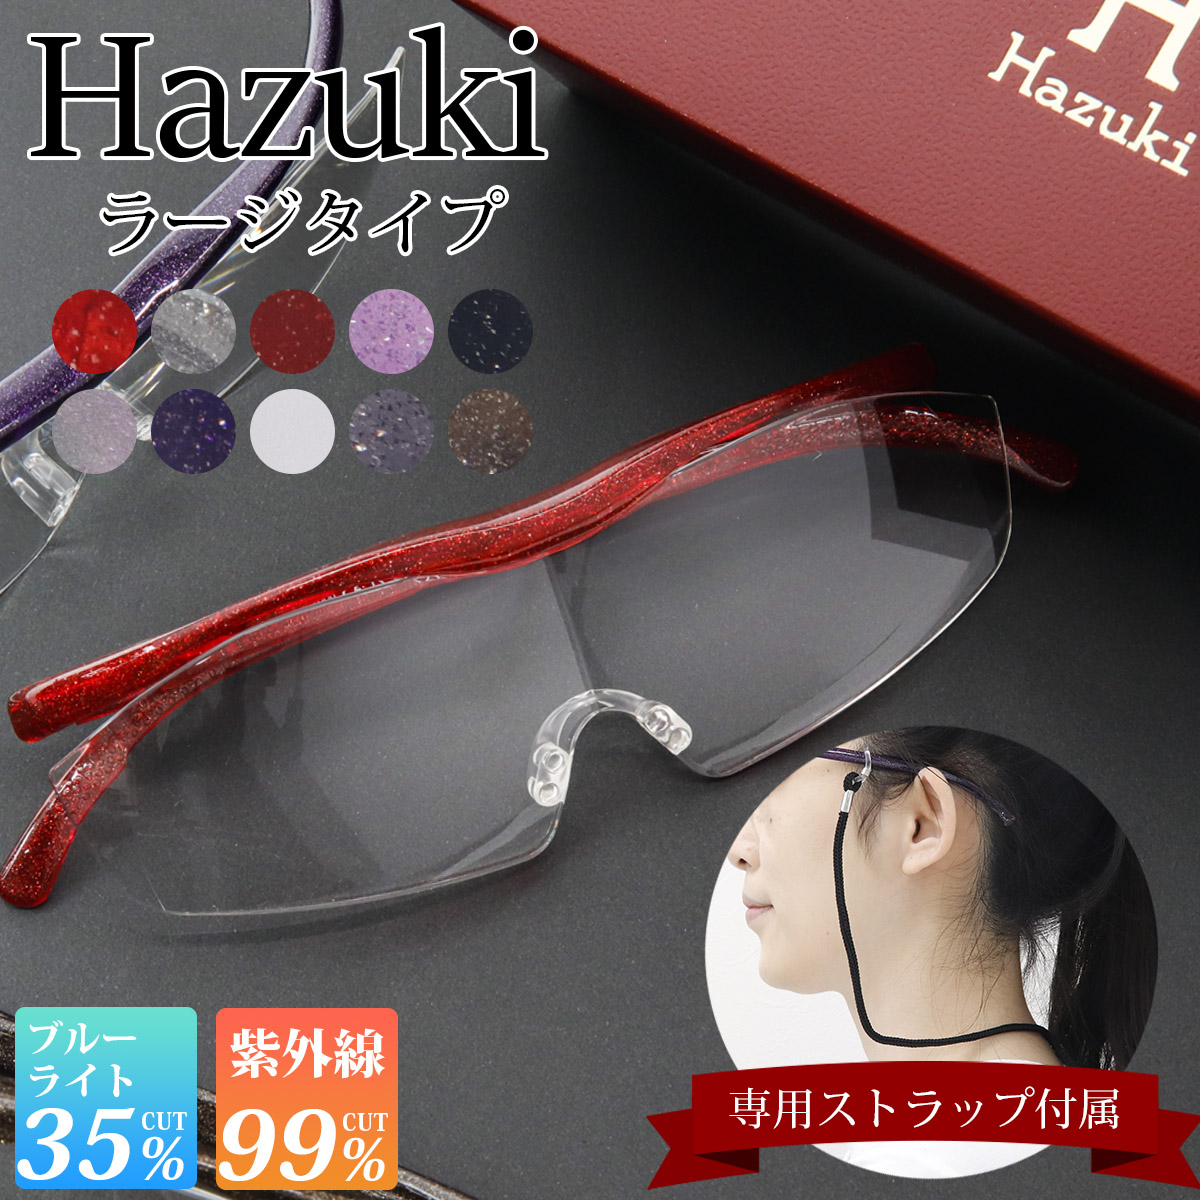 Hazuki ハズキルーペ ラージ クリアレンズ 拡大率 1.85倍 1.6倍 1.32倍 正規品 選べる10色 長時間使用しても疲れにくい 拡大鏡  ルーペ メガネ型